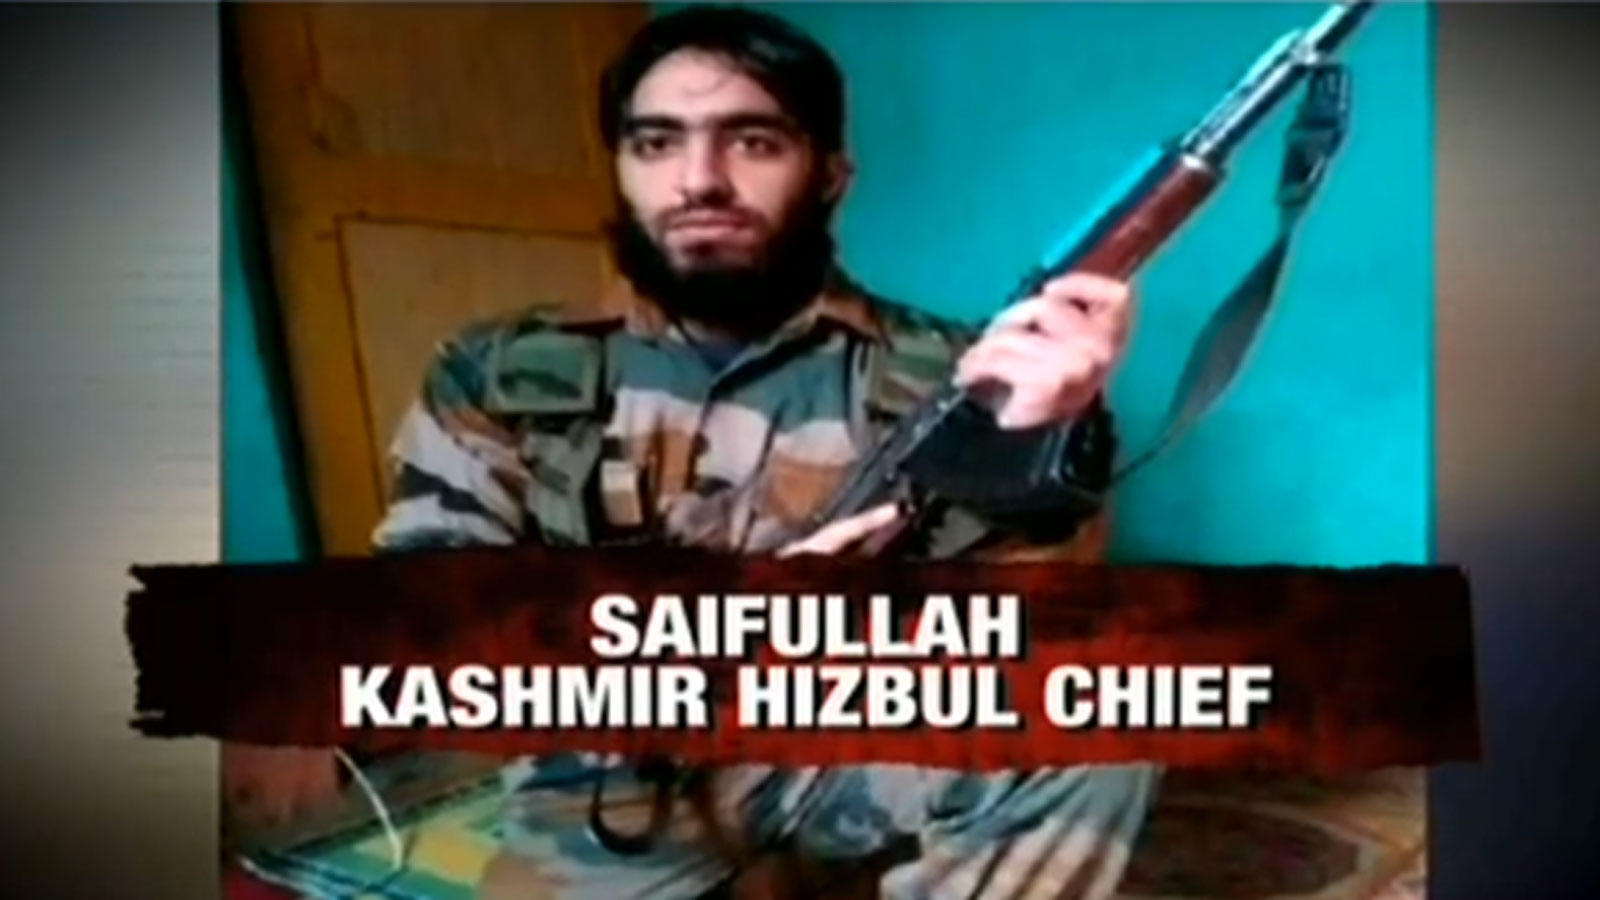 Hizbul chief Saifullah killed in encounter near Srinagar | News - Times of India Videos